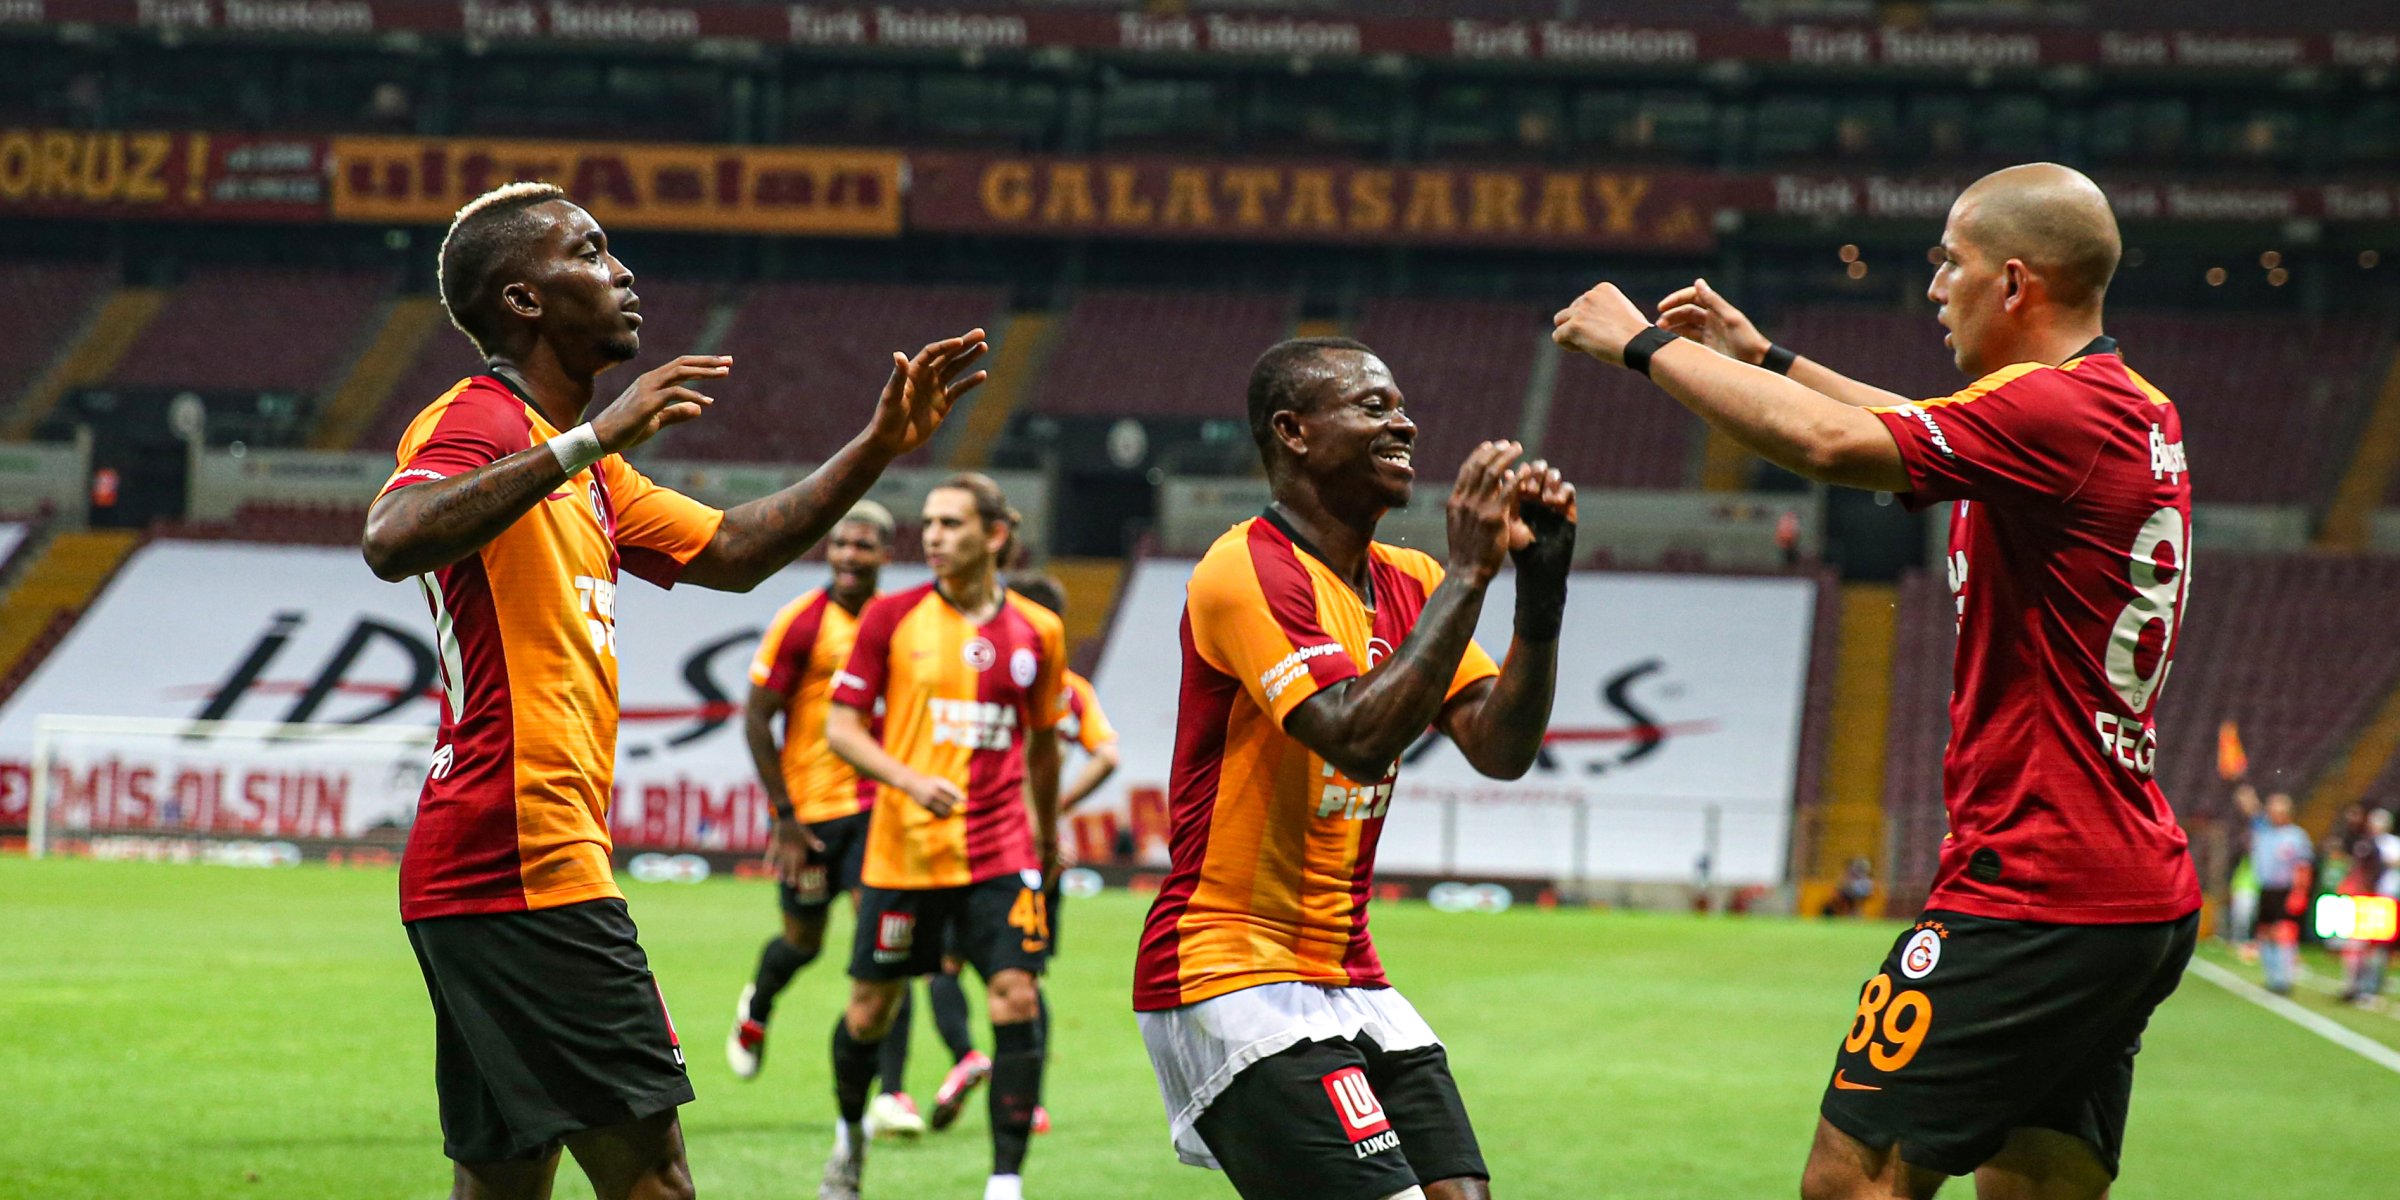 Galatasaray's one last shot at Süper Lig title | Daily Sabah